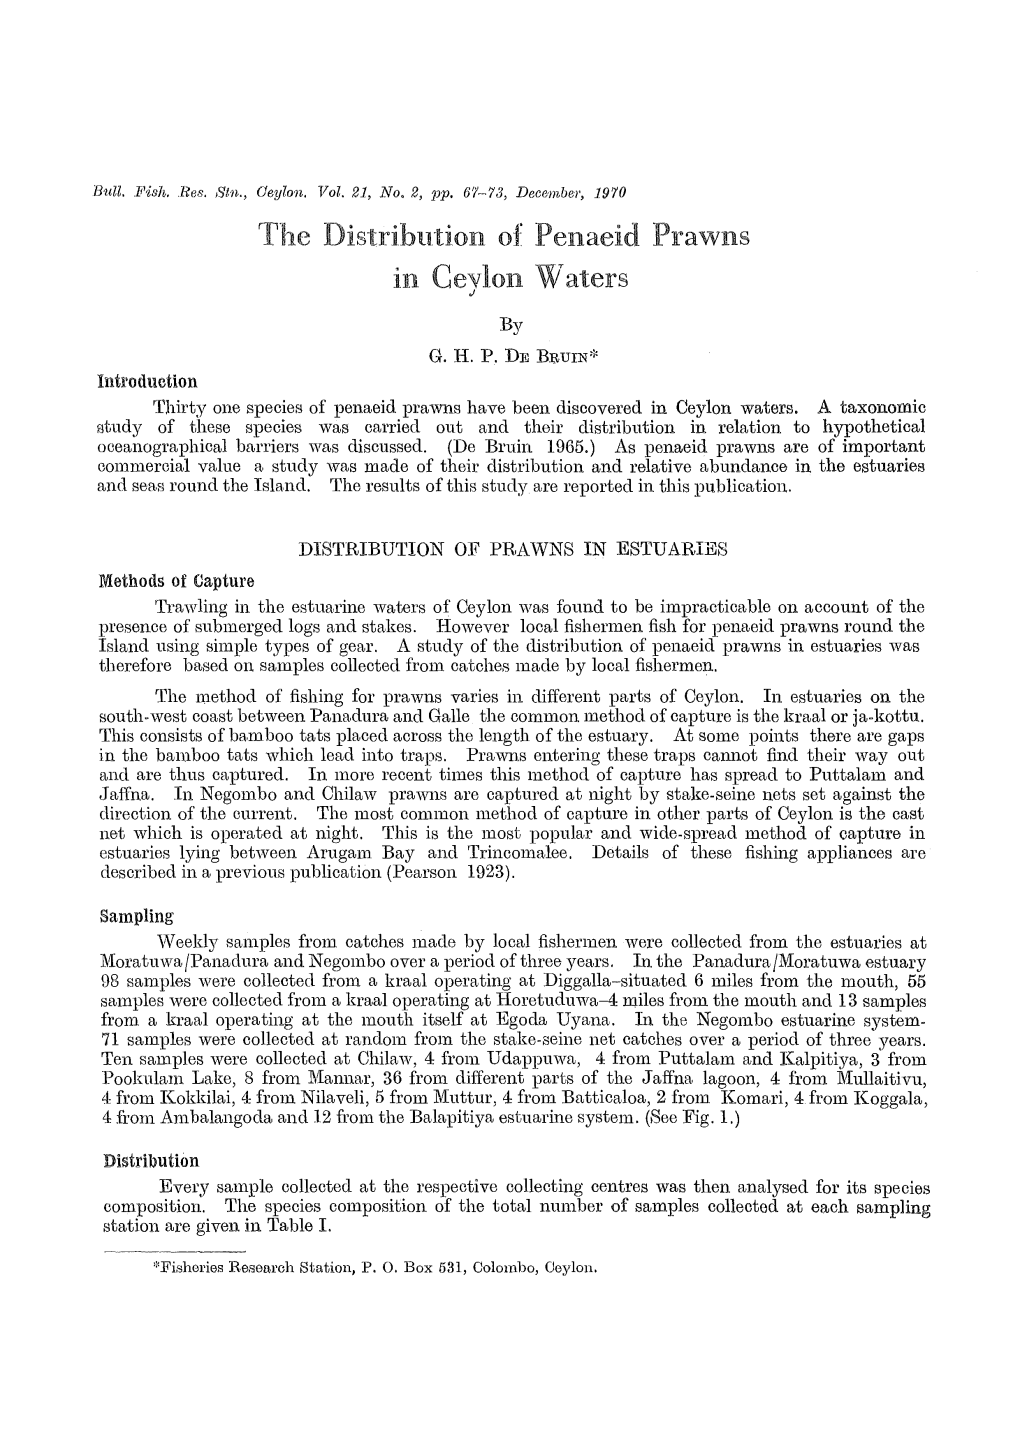 The Distribution of Penaeid Prawn in Ceylon Waters